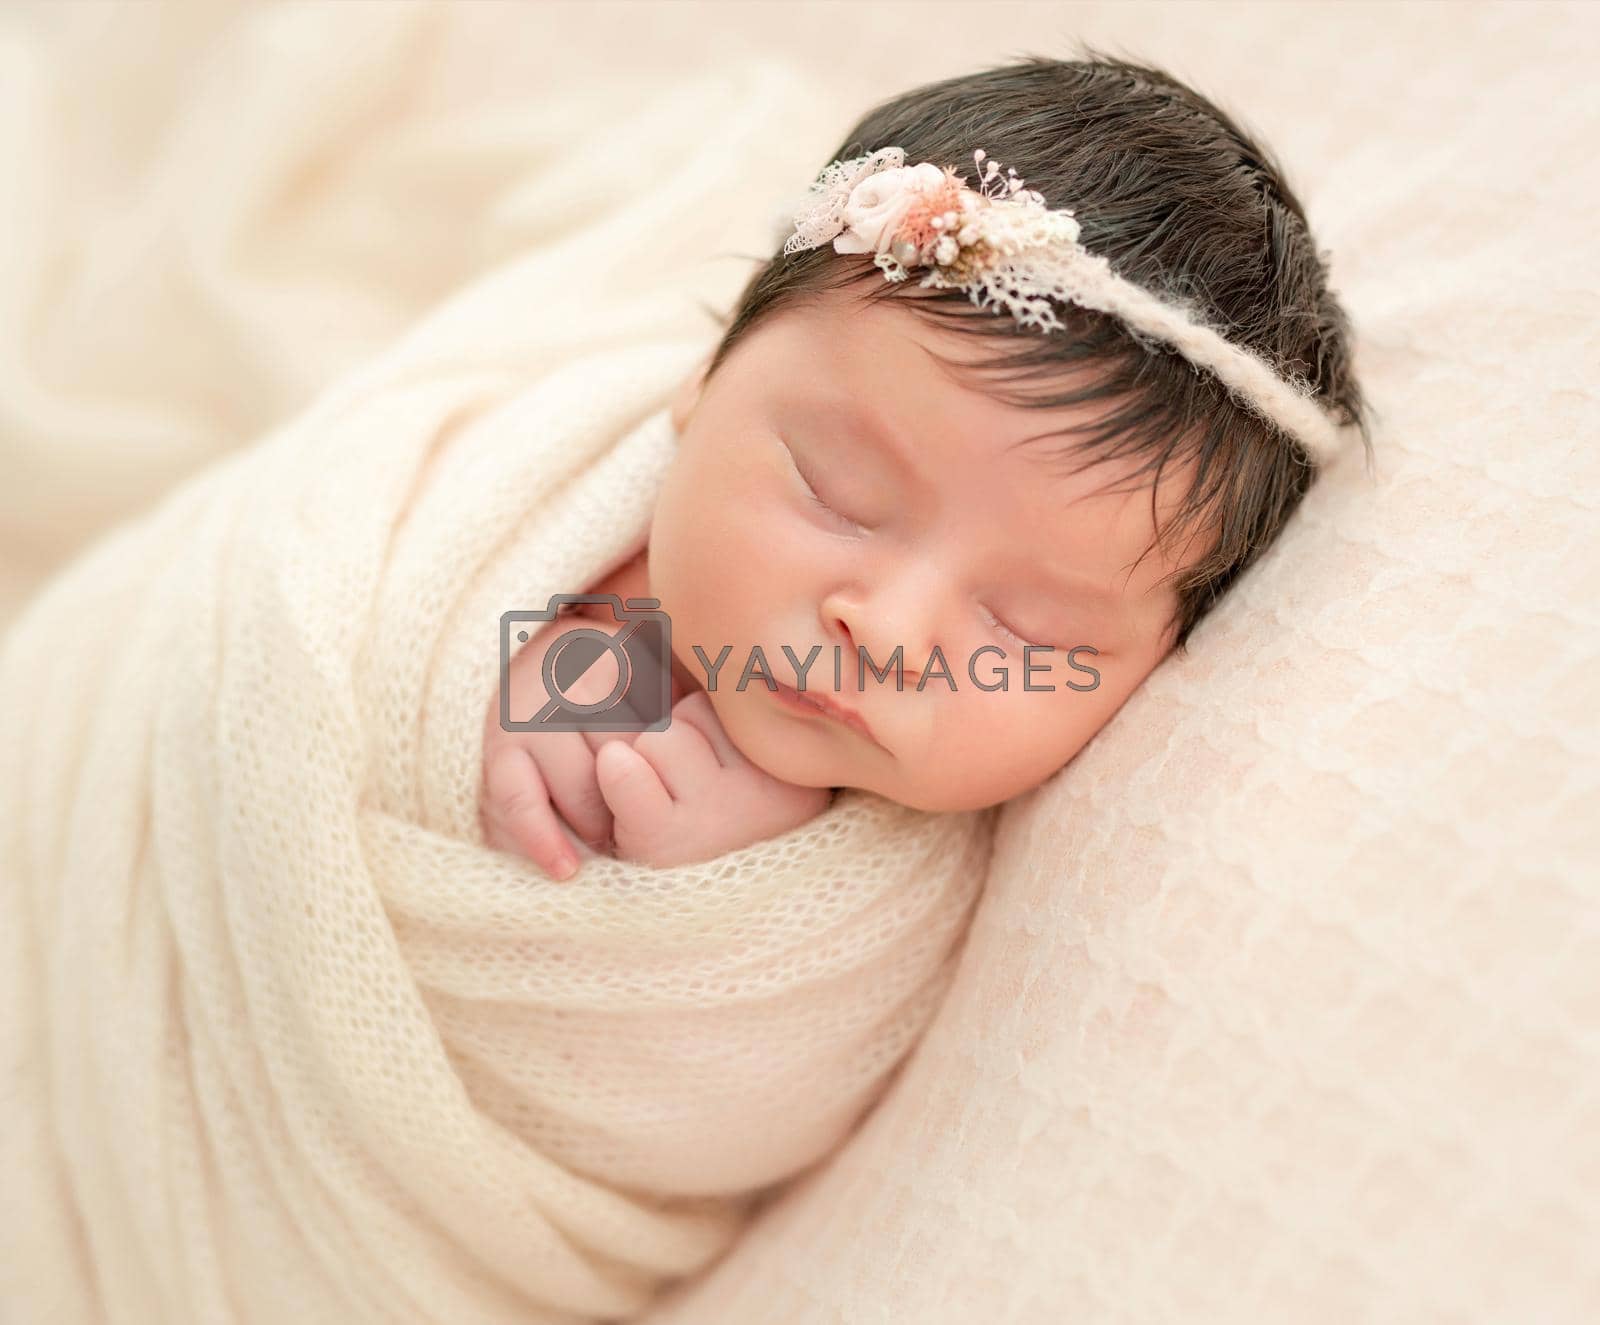 Royalty free image of newborn baby sleeping by tan4ikk1